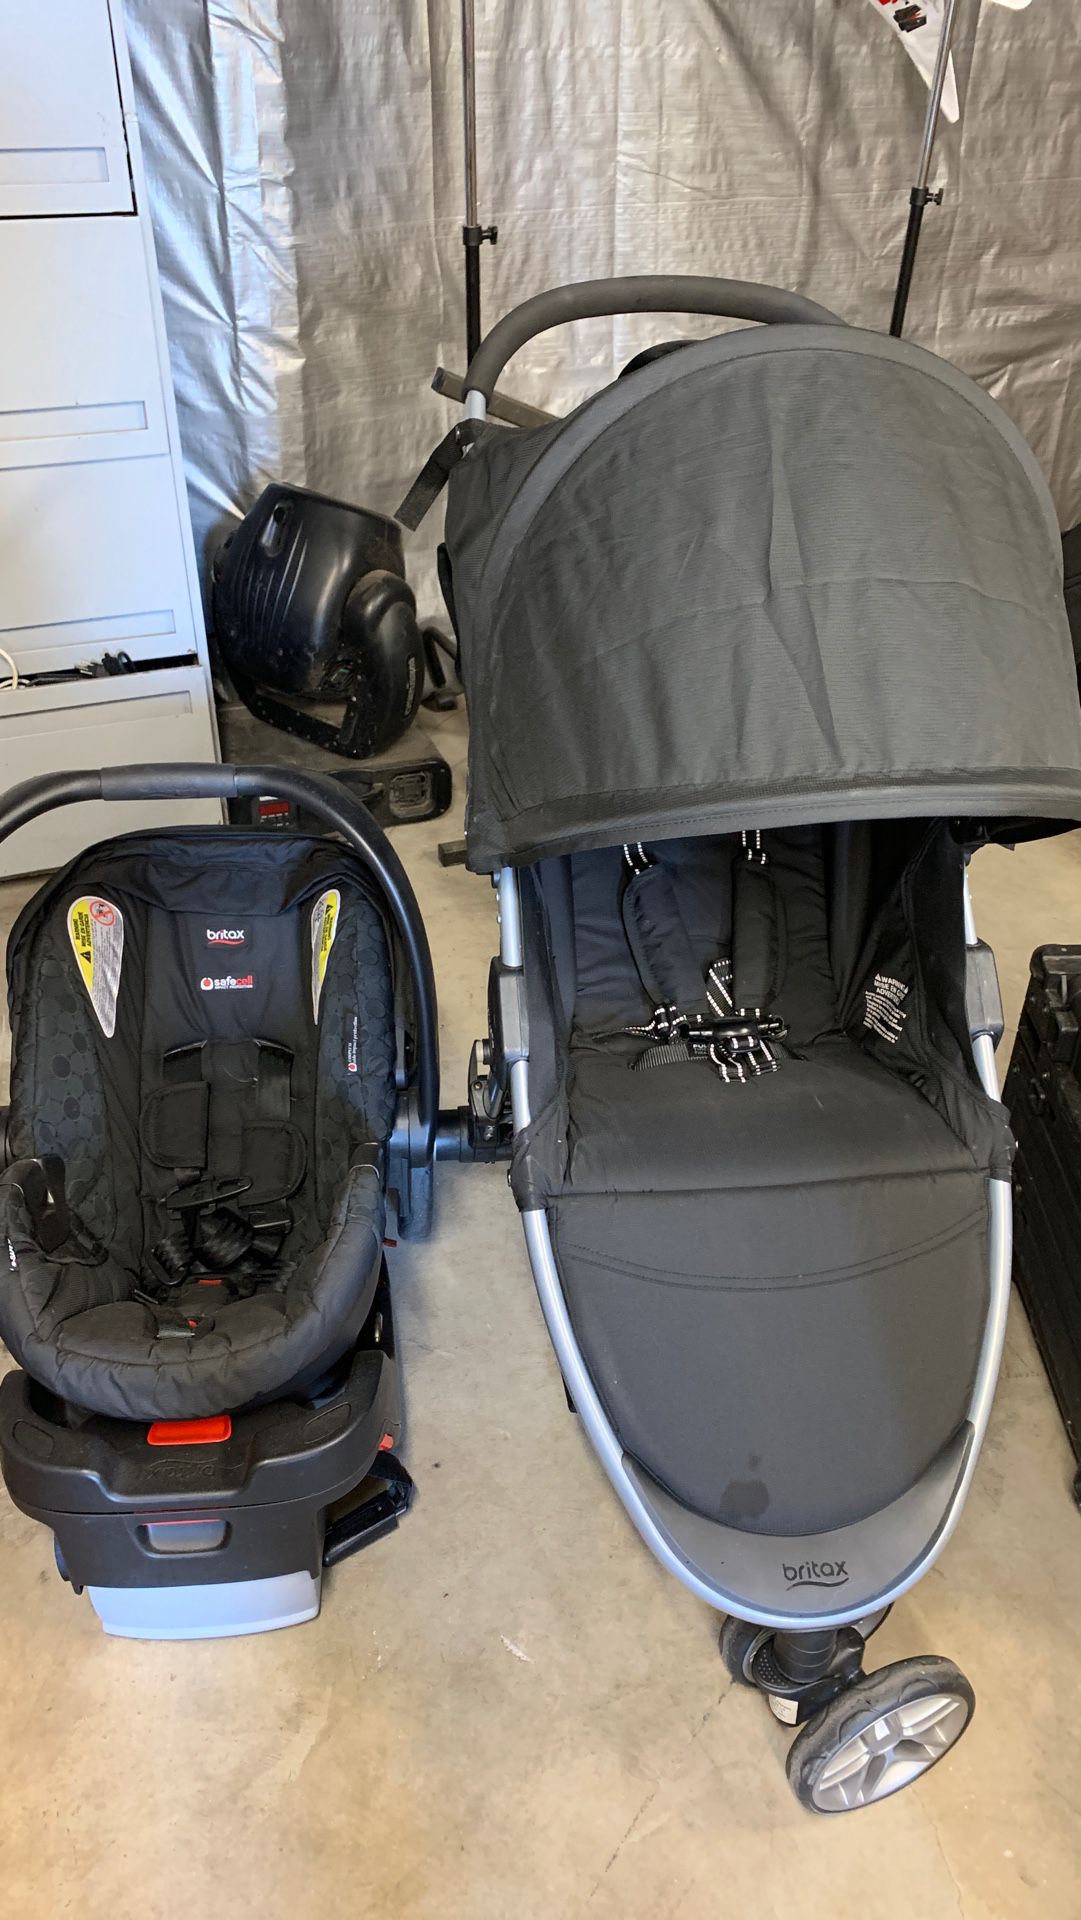 Britex stroller & car seat